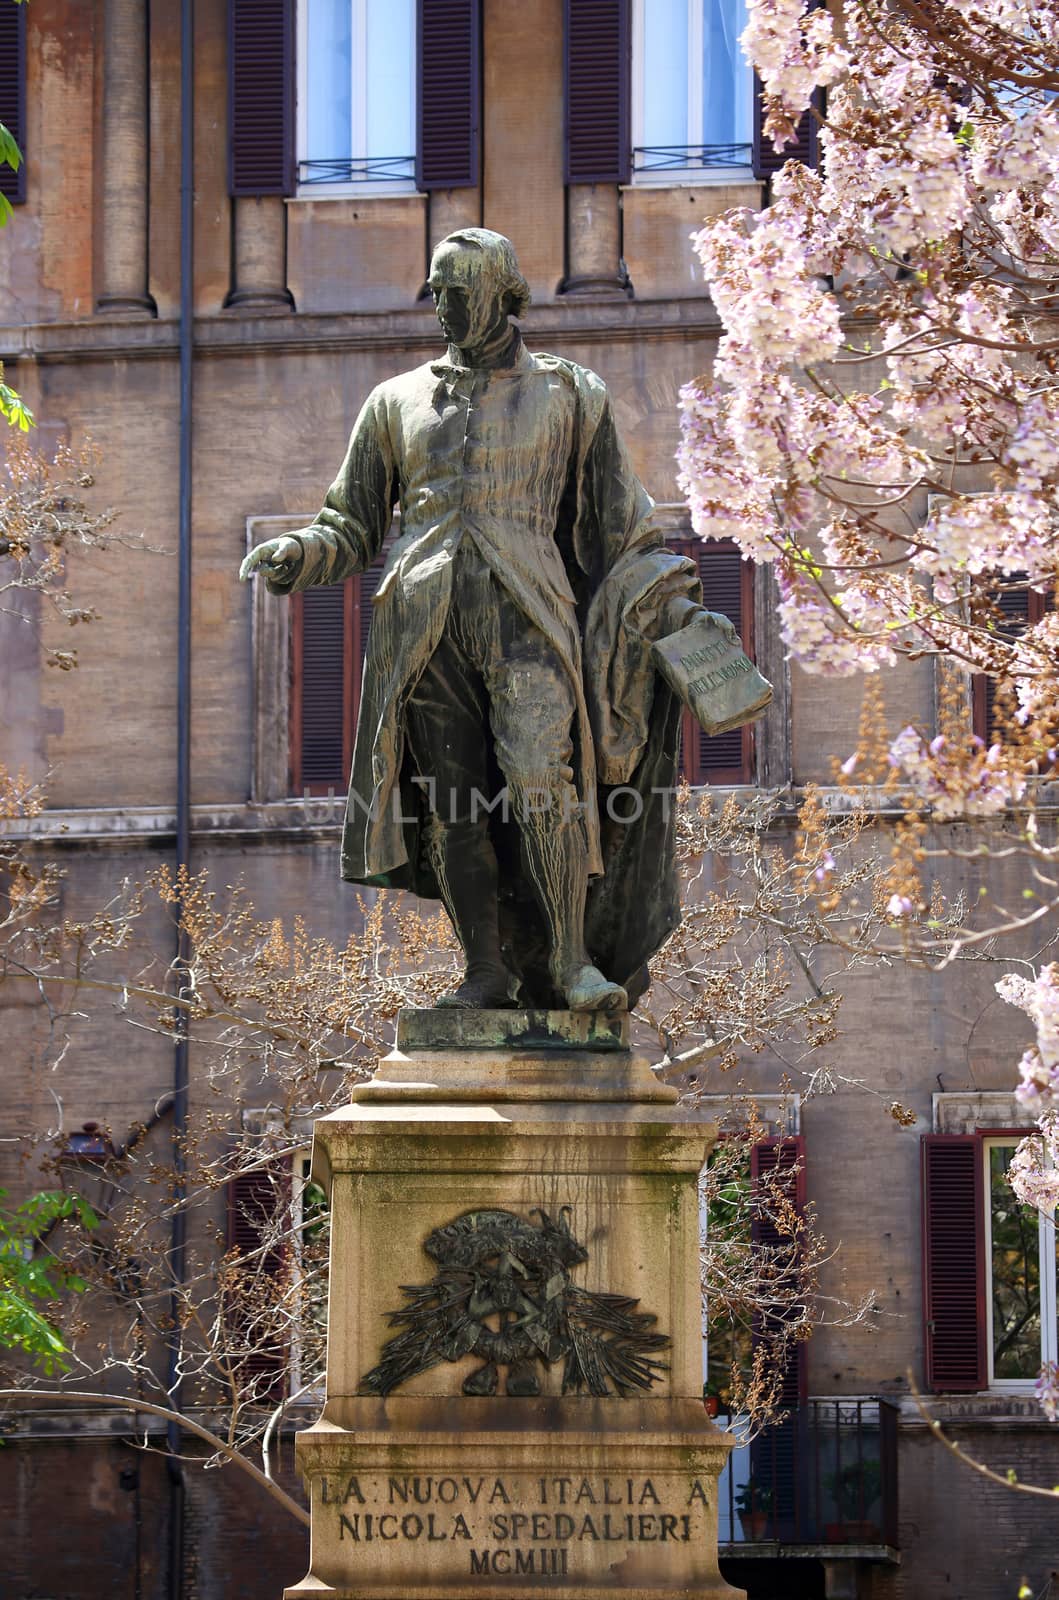 Statue of the philosopher Nicola Spedalieri MCMIII in Rome, Italy